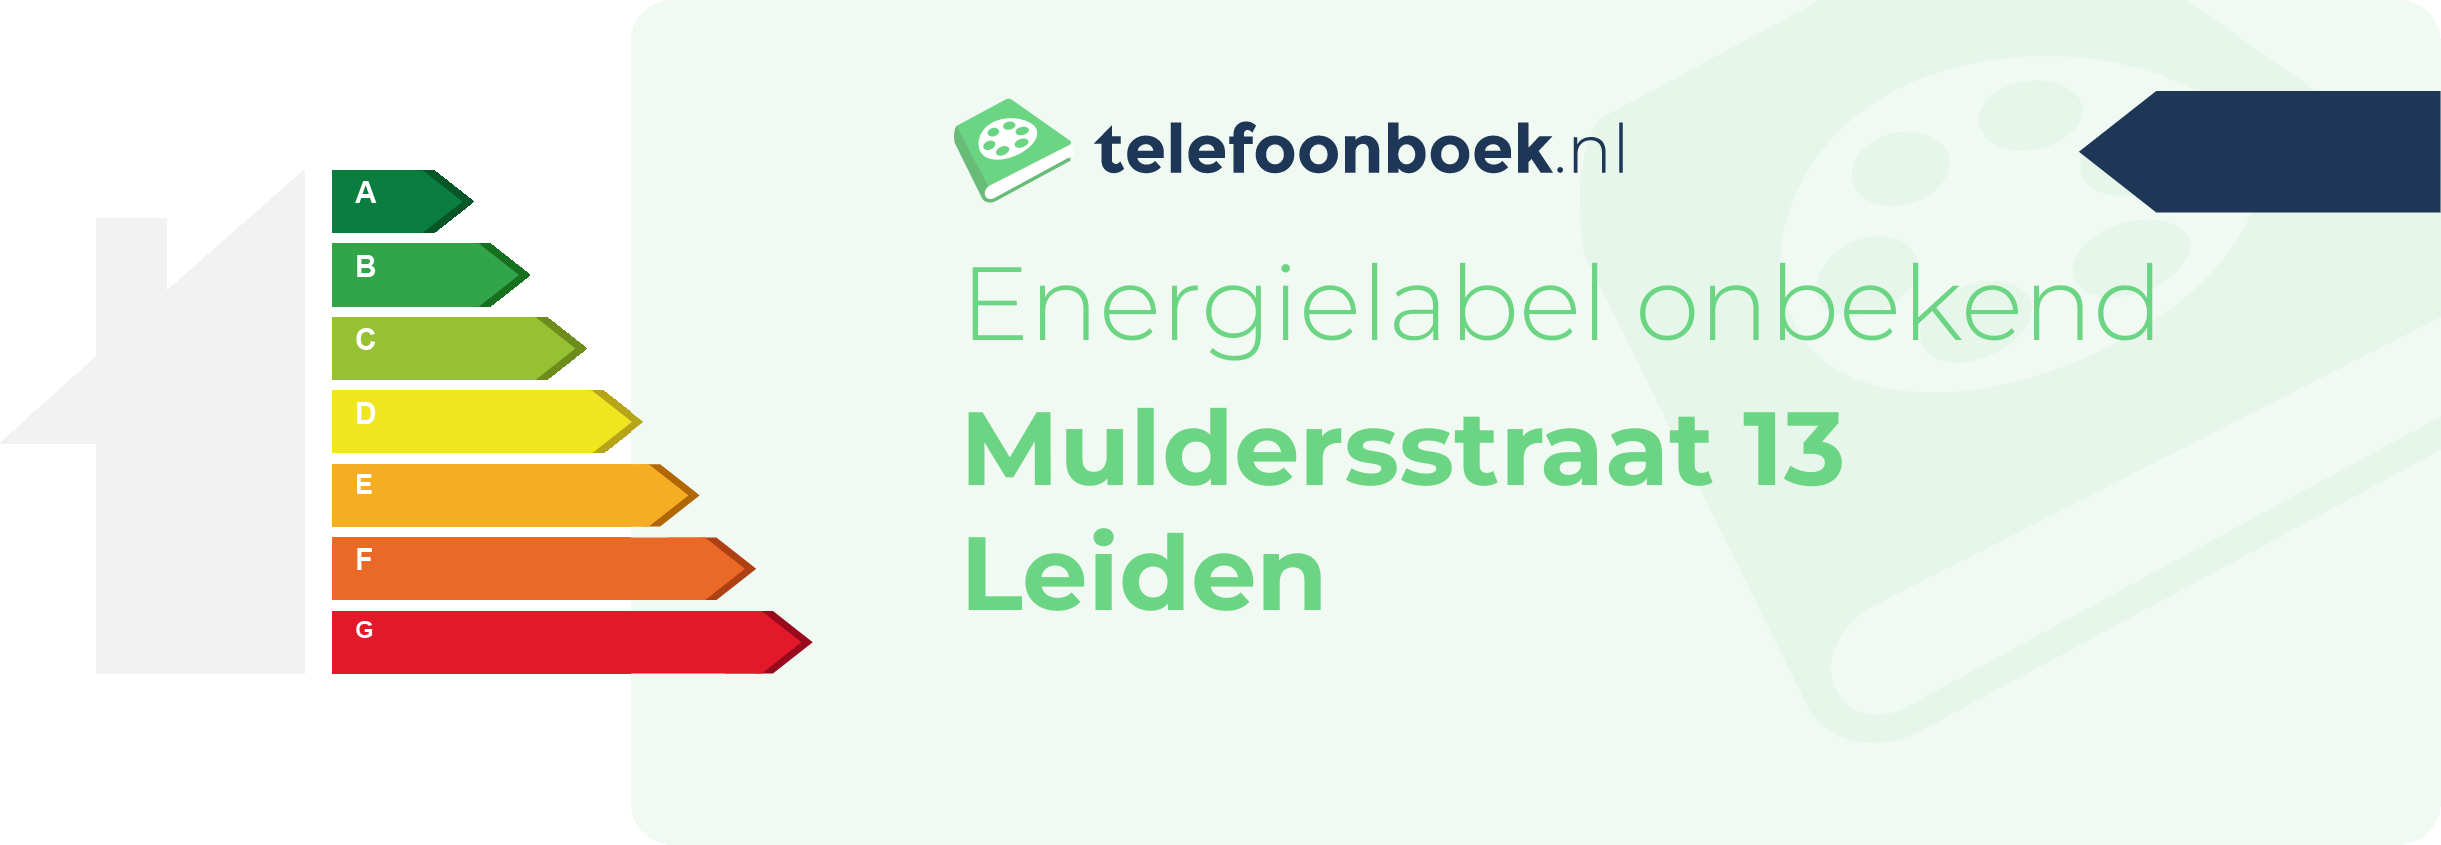 Energielabel Muldersstraat 13 Leiden